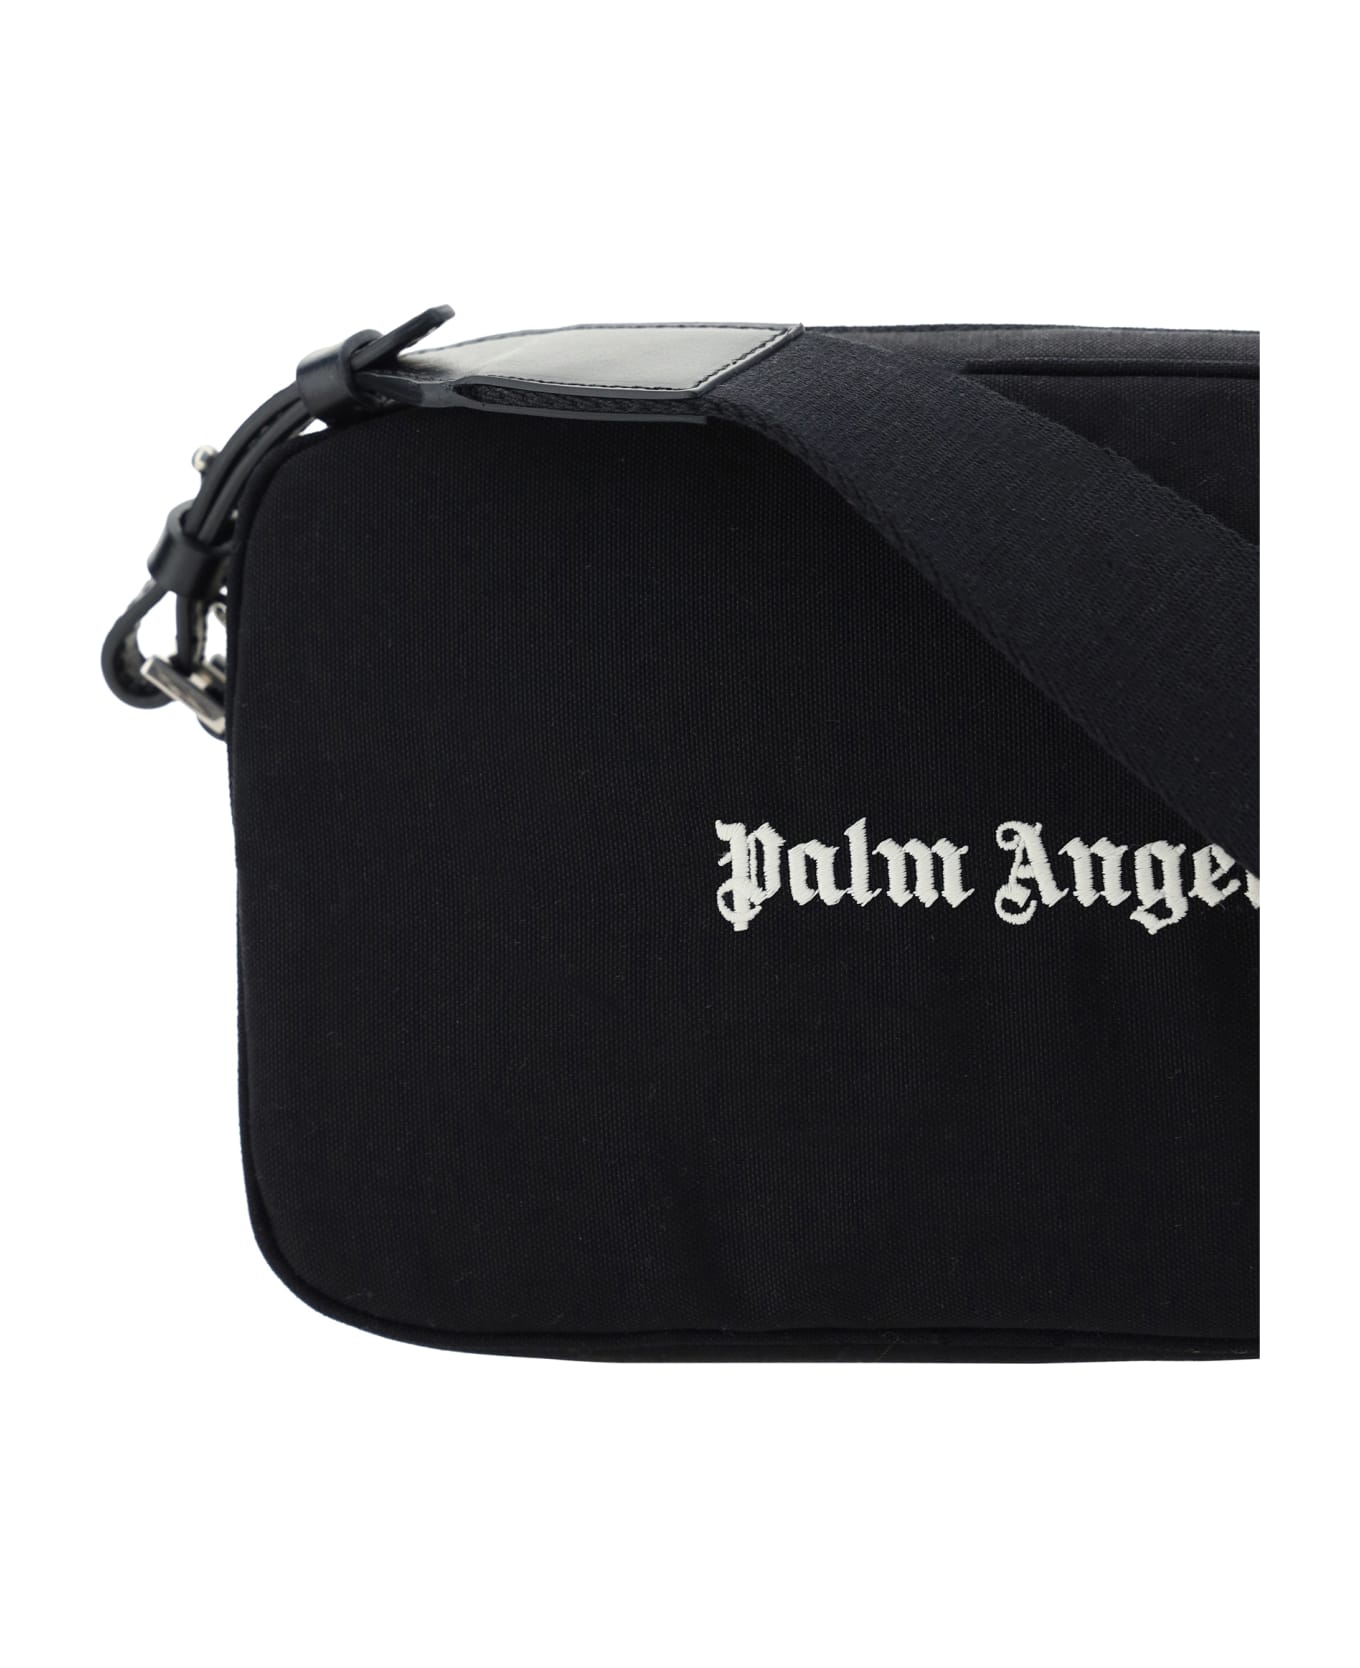 Palm Angels Camera Case Bag - Black White